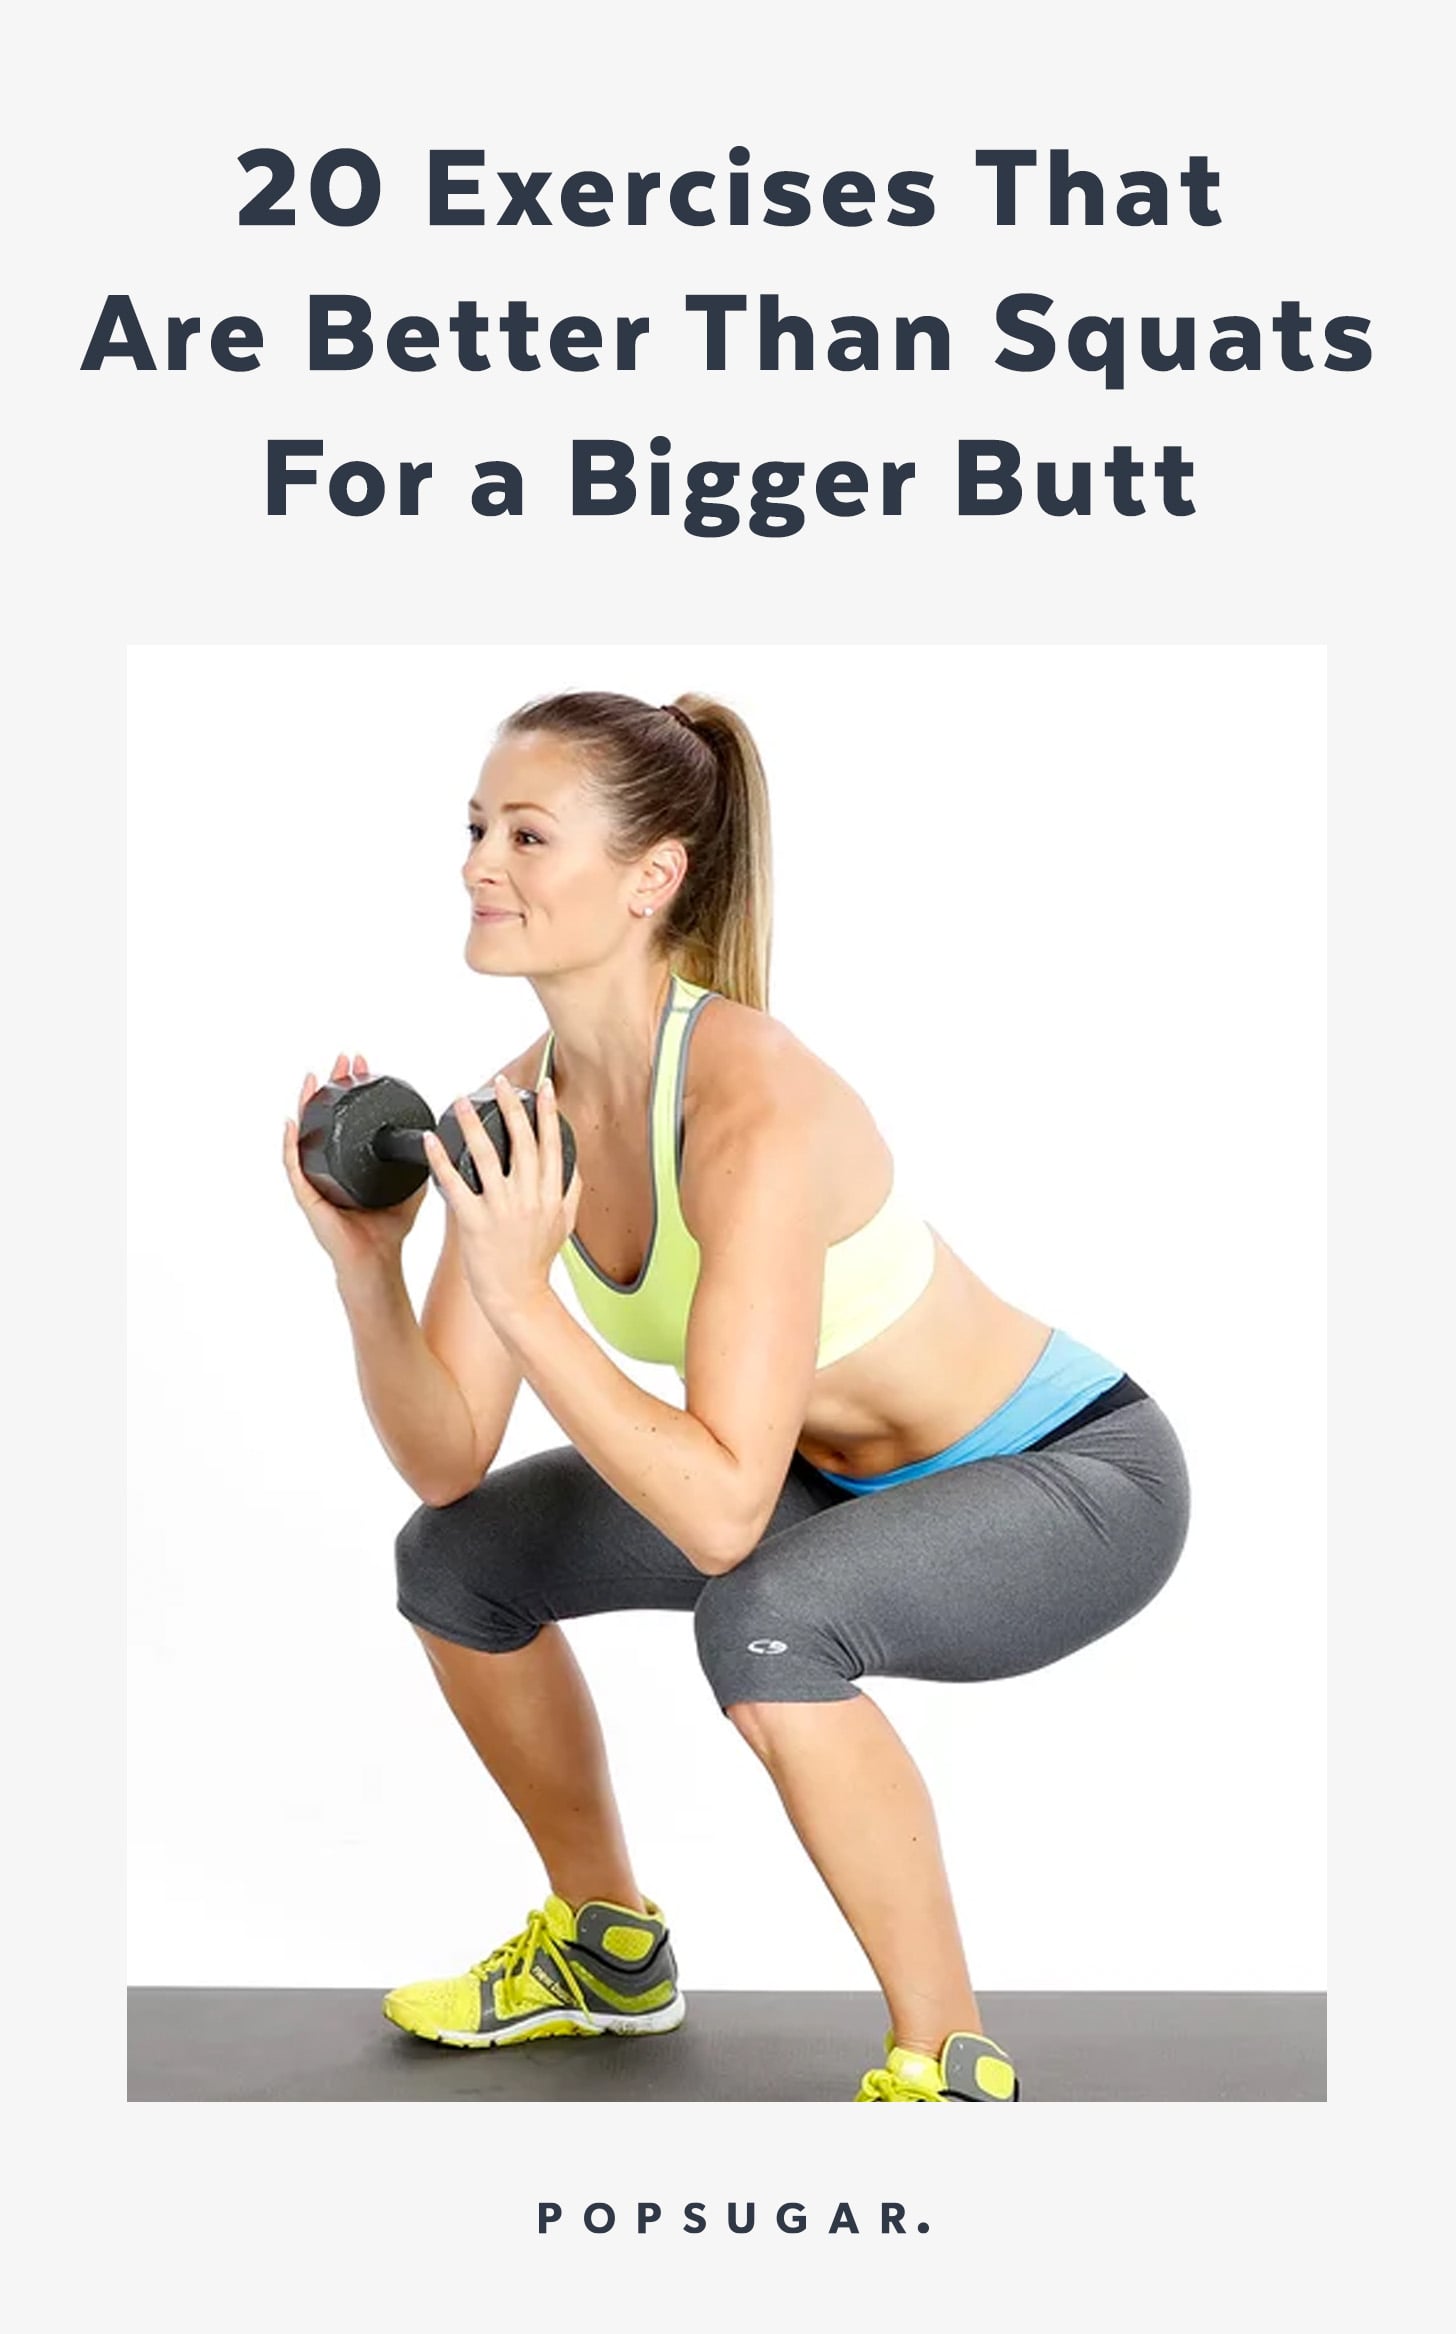 Do Squats Make Your Butt Bigger?.